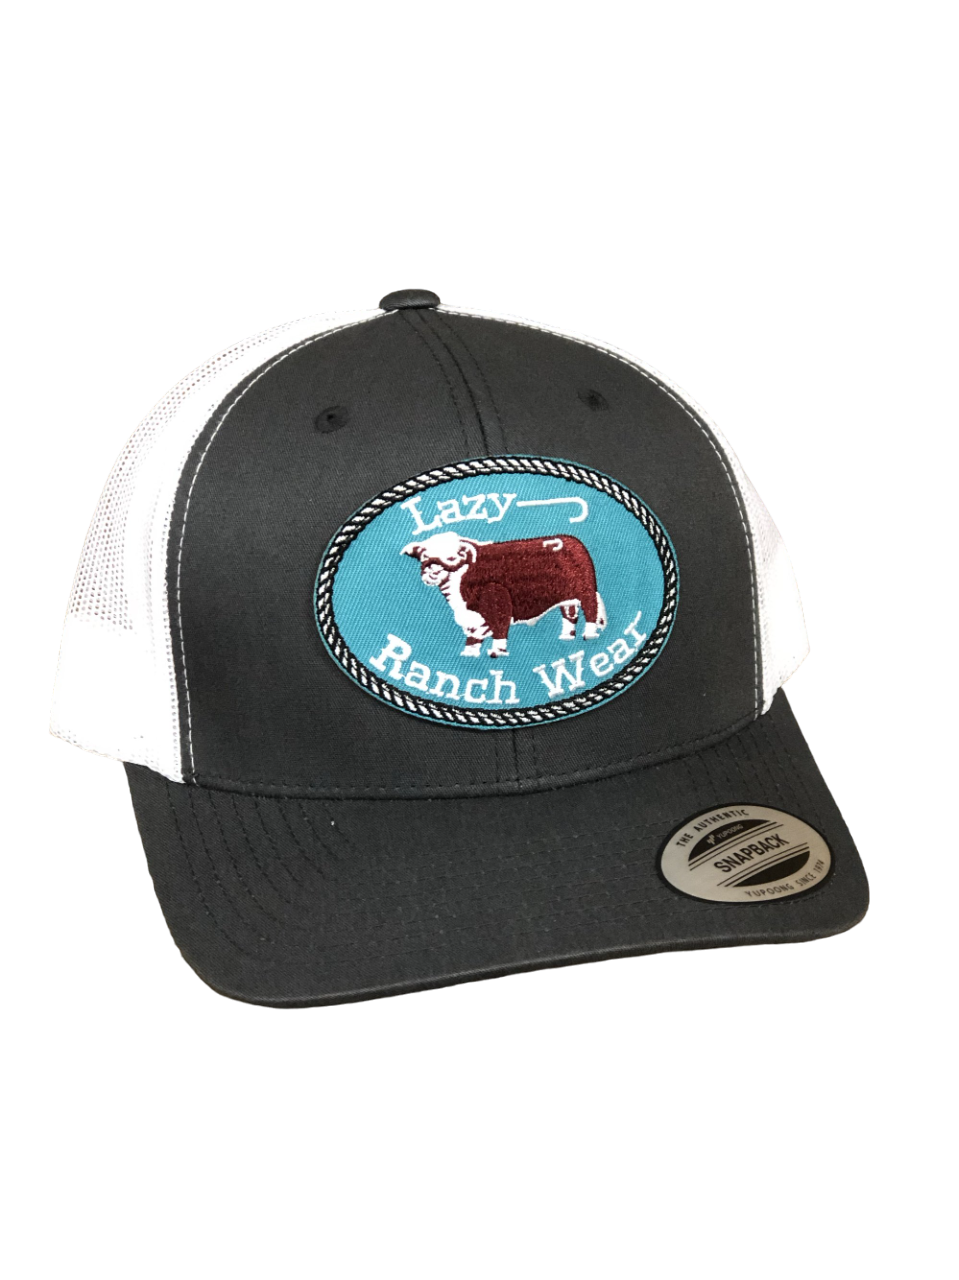 Lazy J Ranch Wear Original Patch Cap